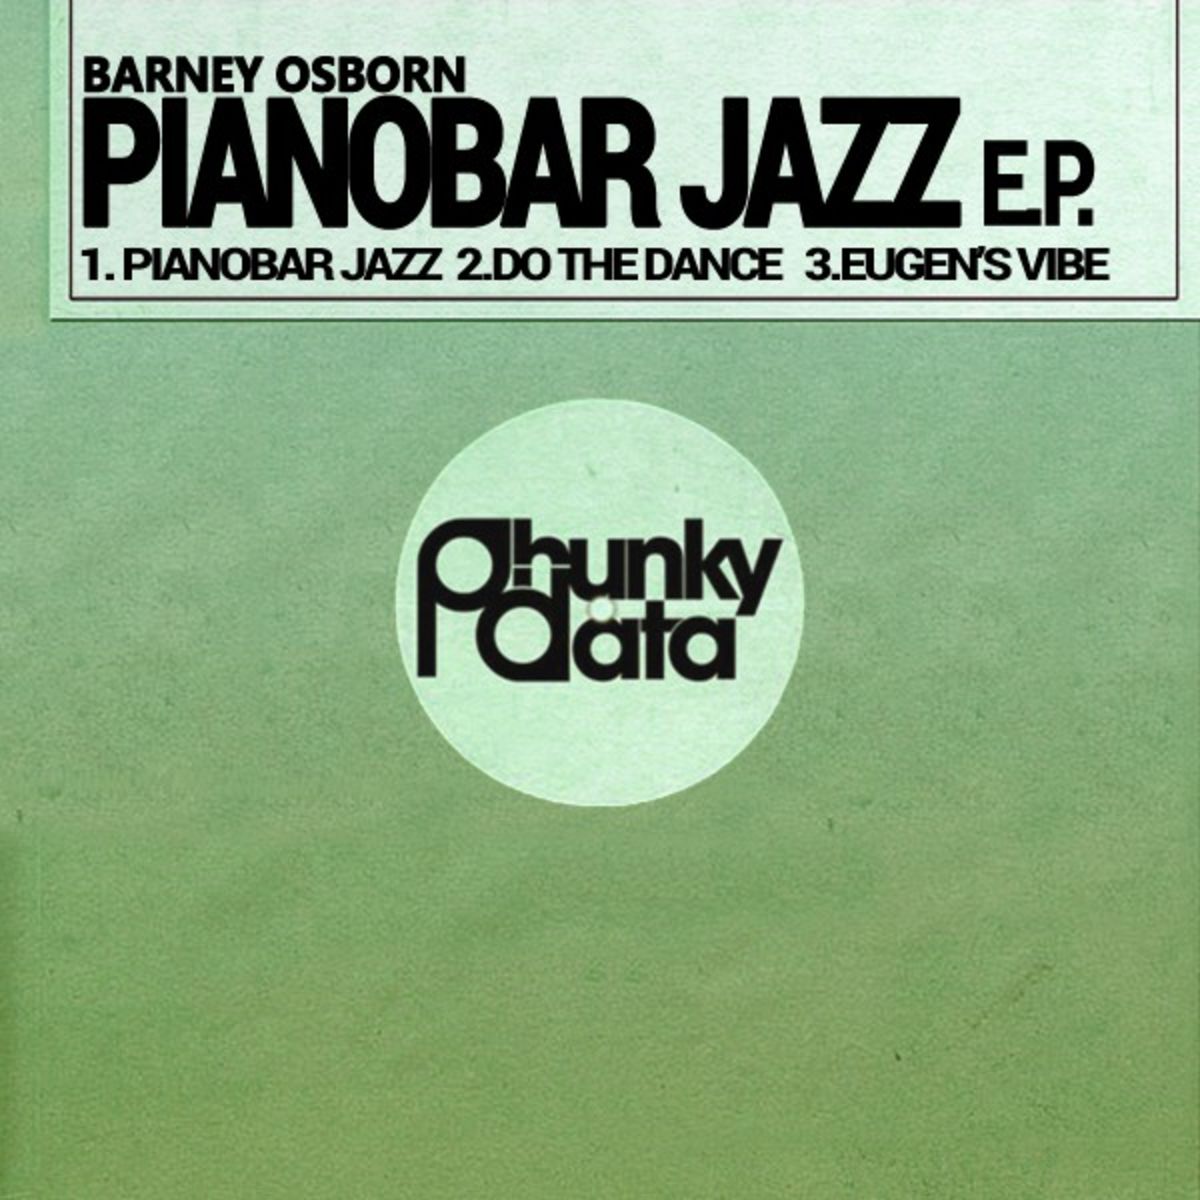 Barney Osborn - Pianobar Jazz EP / Phunky Data